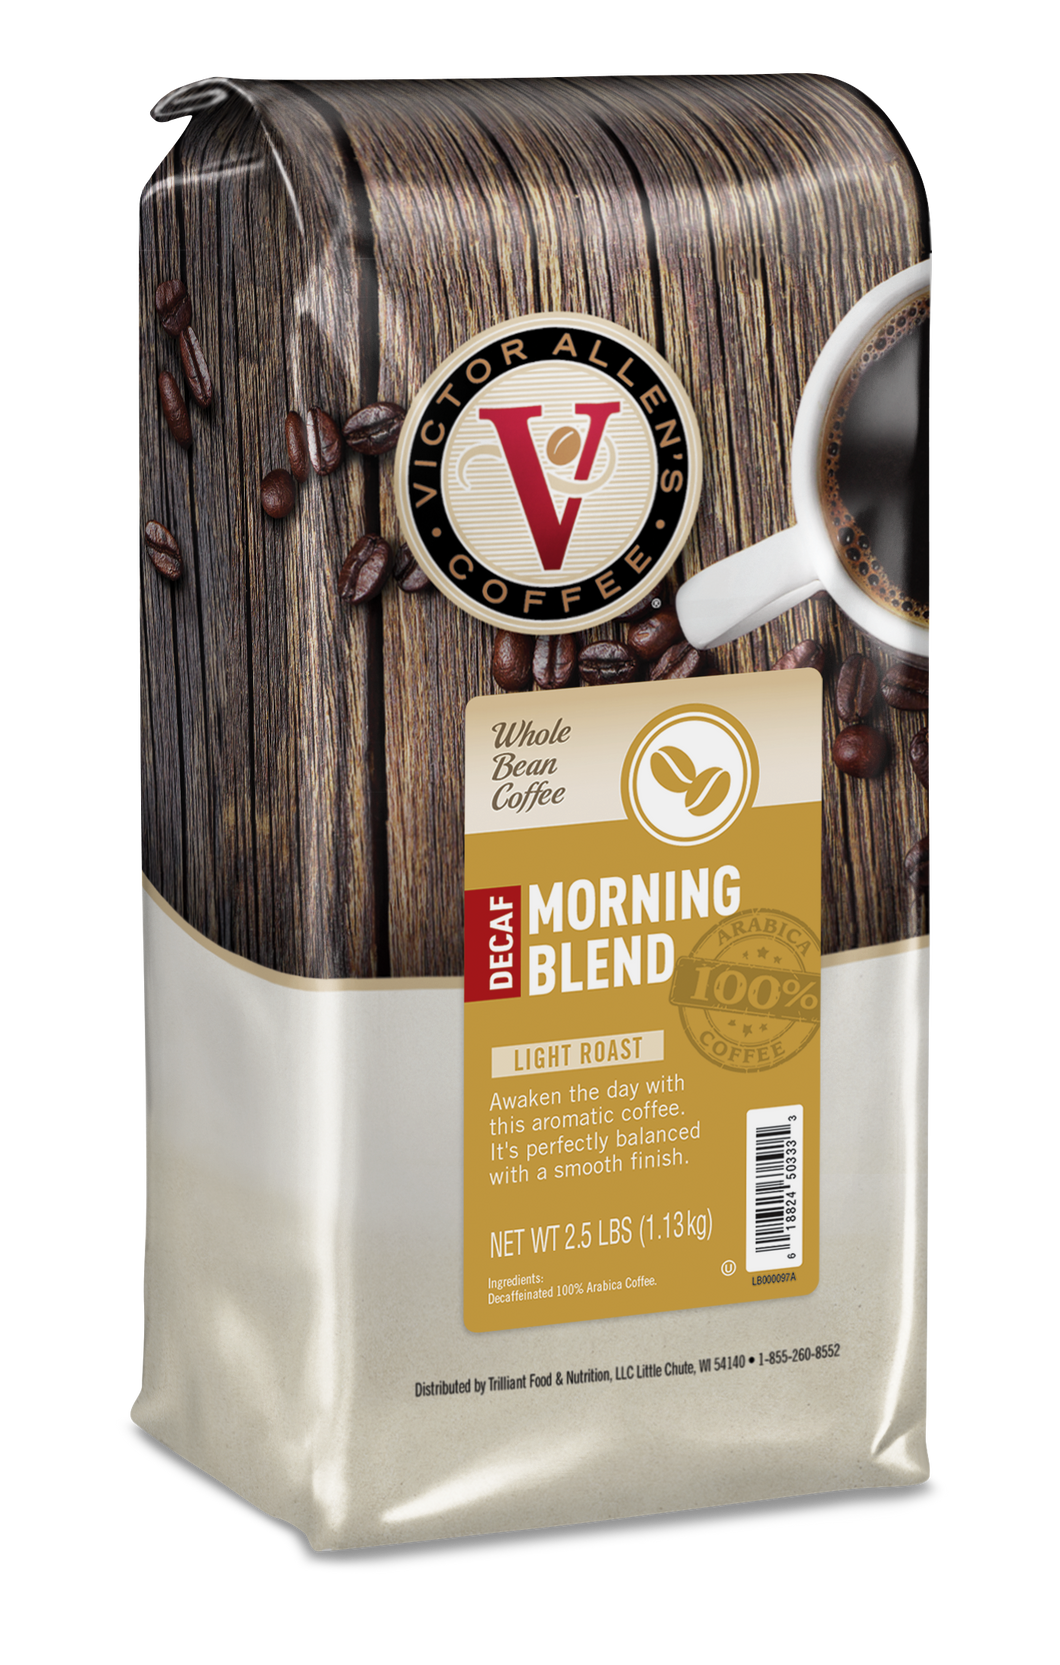 Decaf Morning Blend, Light Roast, Whole Bean Coffee, 2.5lb Bag